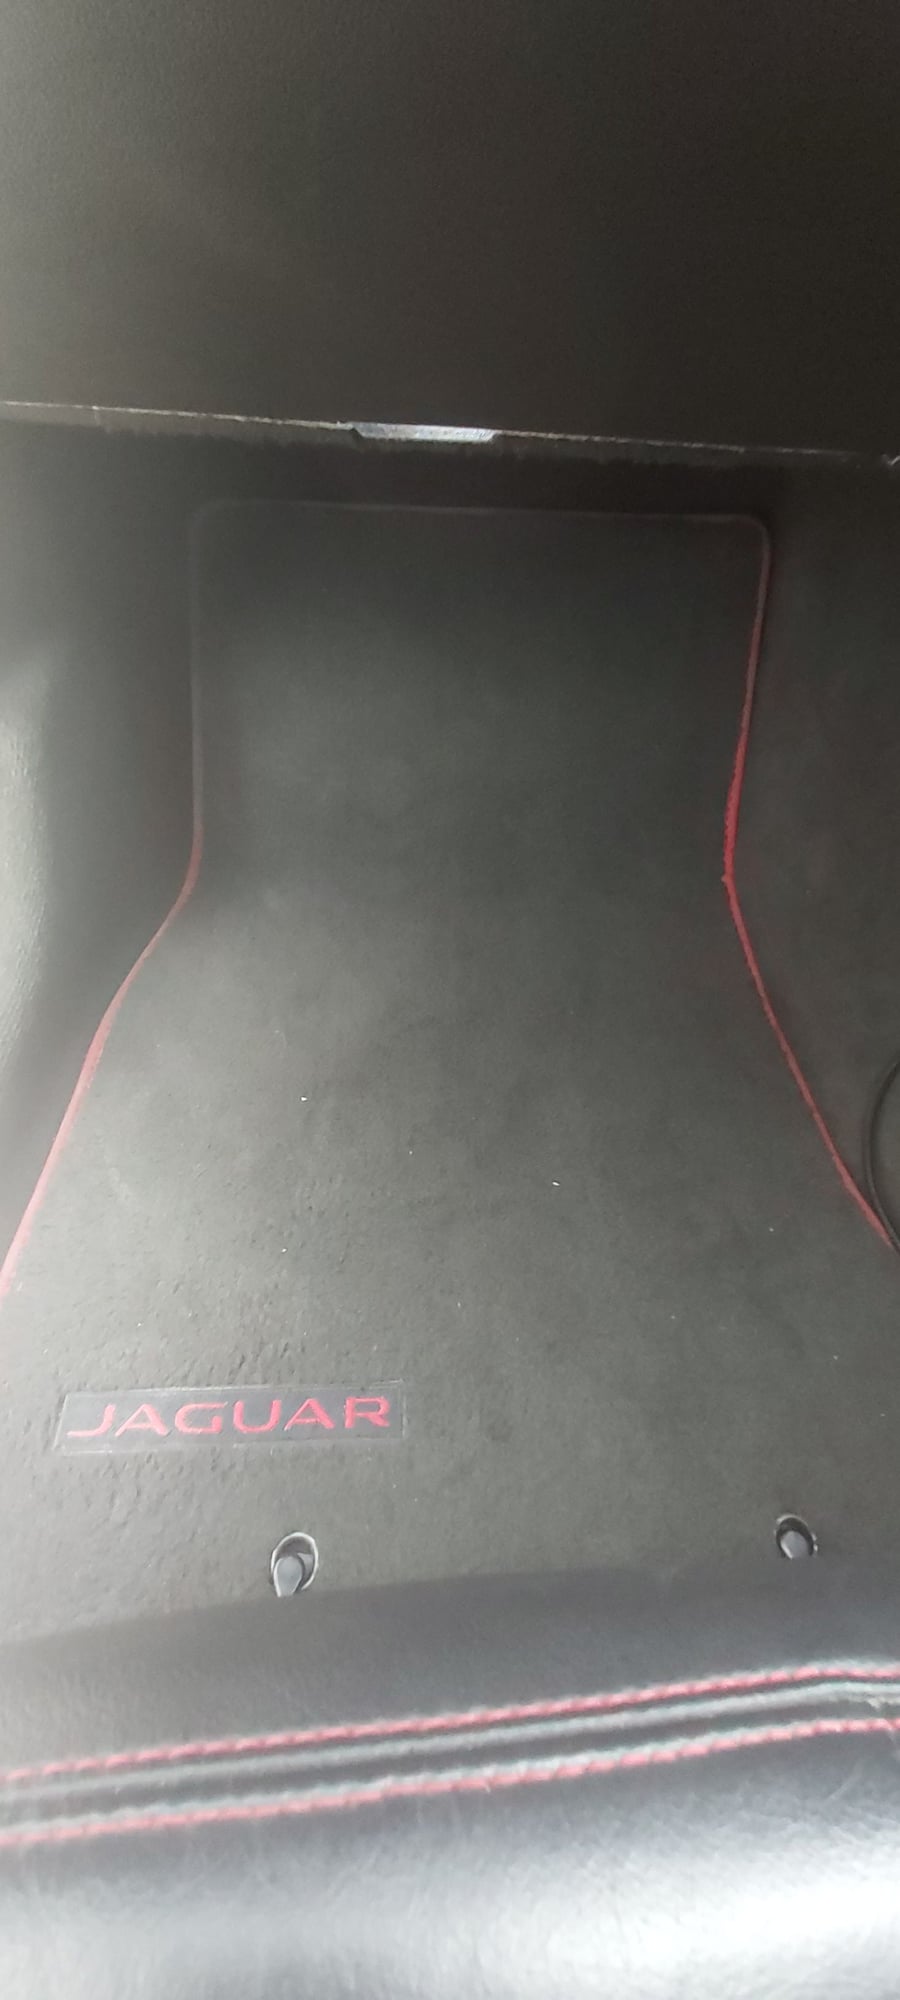 2015 Jaguar XF - Jaguar XF-S Sportbrake 3.0 V6 D S Portfolio - Used - VIN SAJAC0325FNU48644 - 95,000 Miles - 6 cyl - 2WD - Automatic - Wagon - Portishead, Bristol BS20, United Kingdom